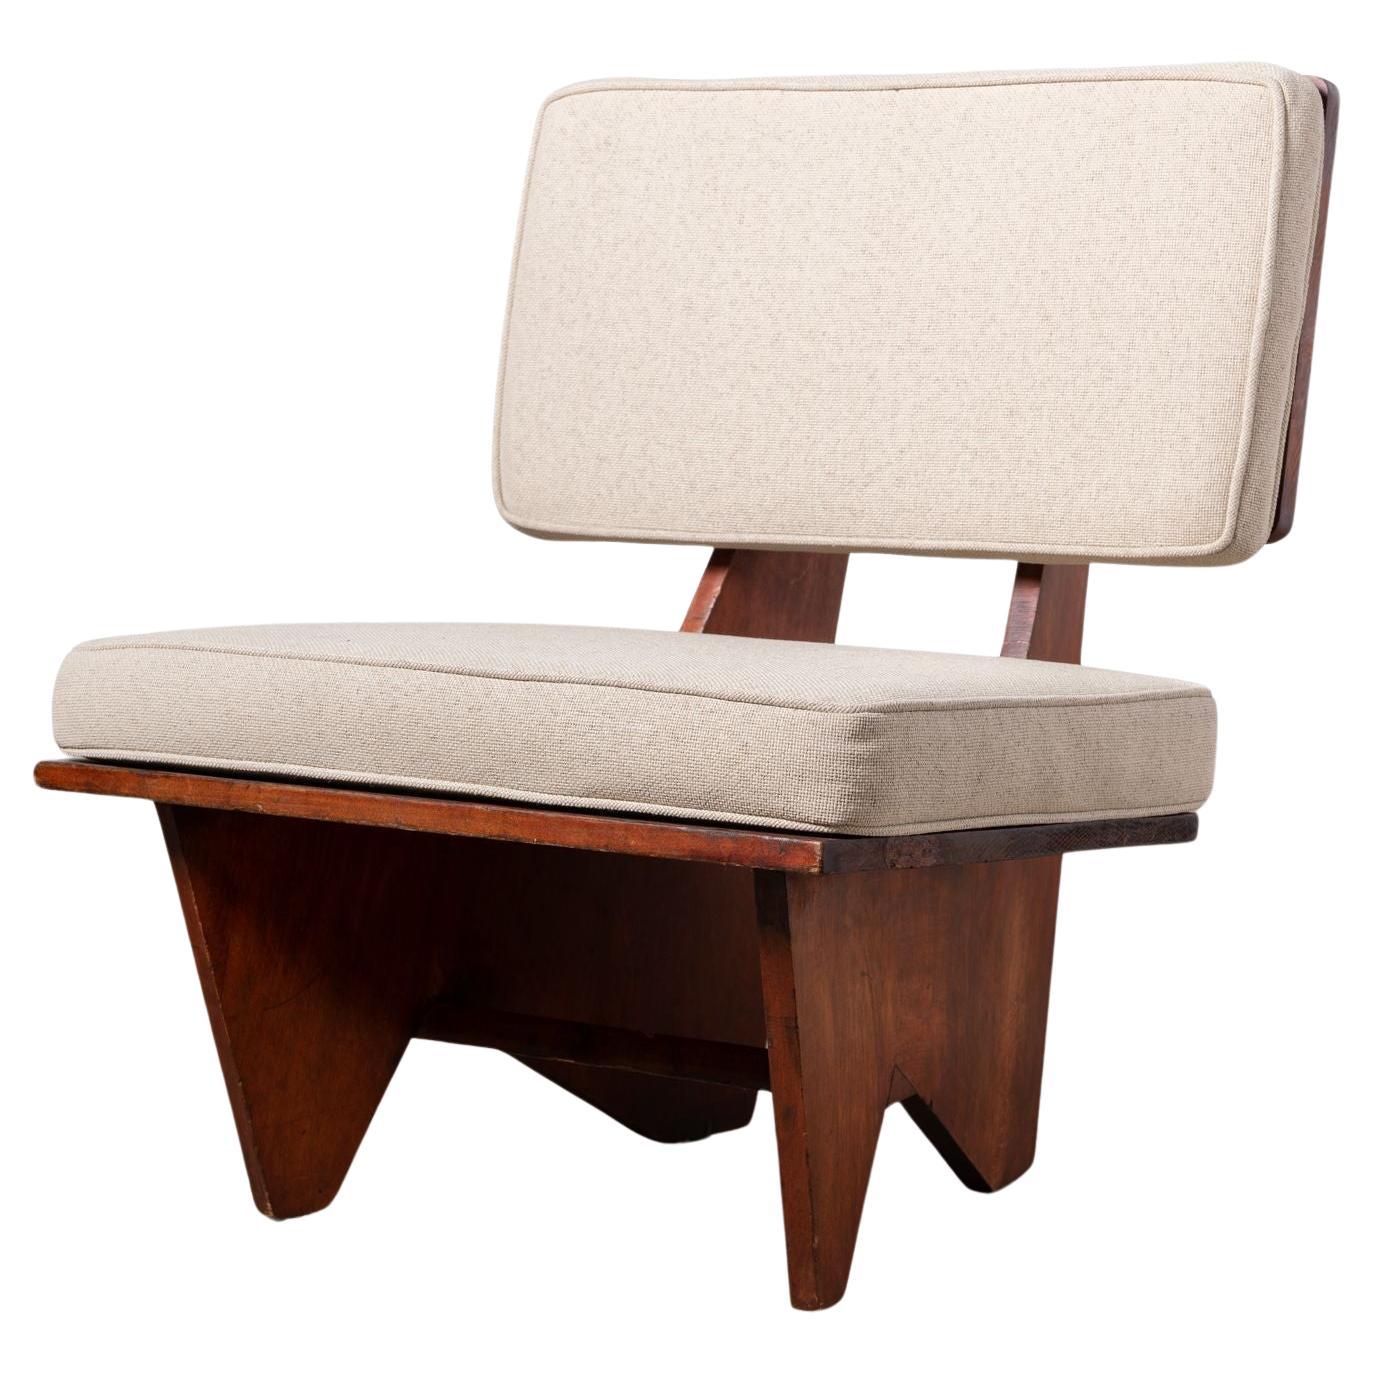 Did Frank Lloyd Wright make furniture?